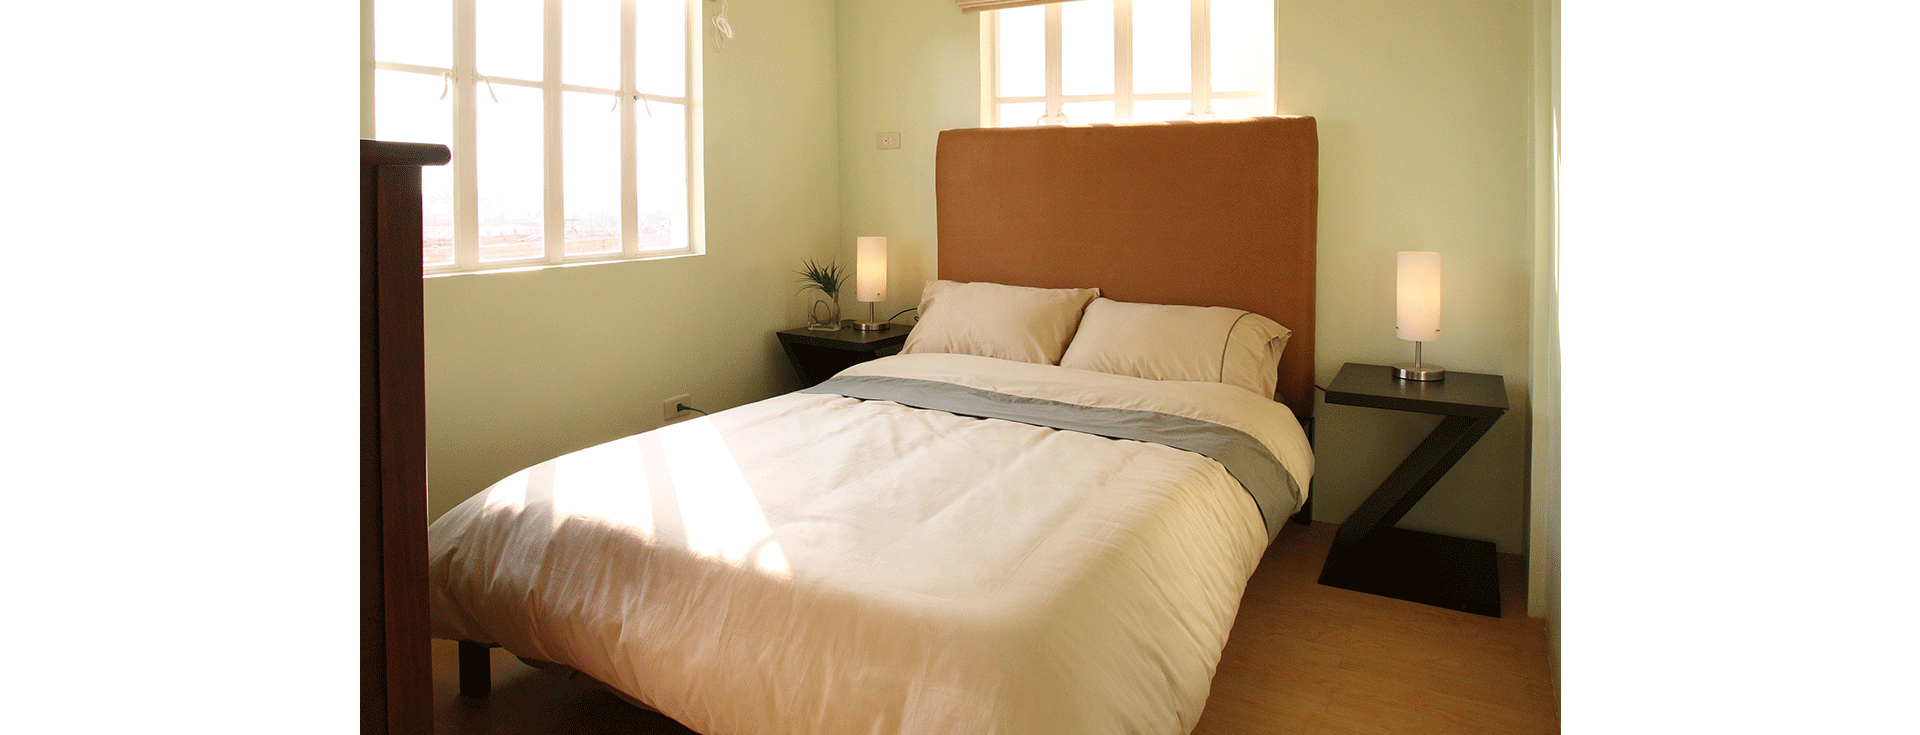 ILGR_Celeste &amp; Catarina - Master Bedroom